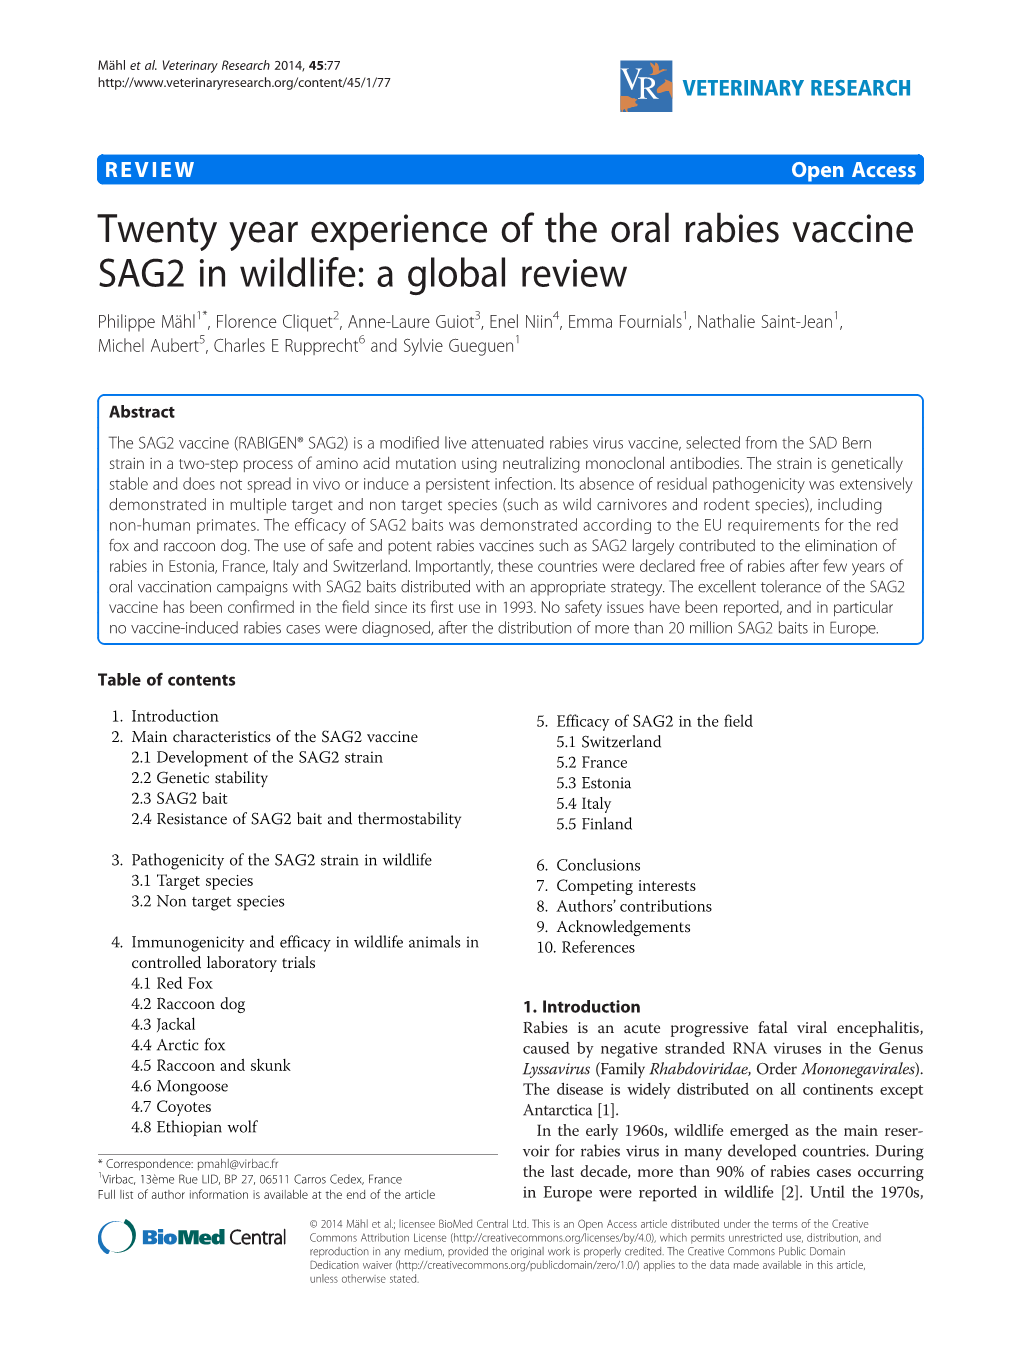 Twenty Year Experience of the Oral Rabies Vaccine SAG2 in Wildlife